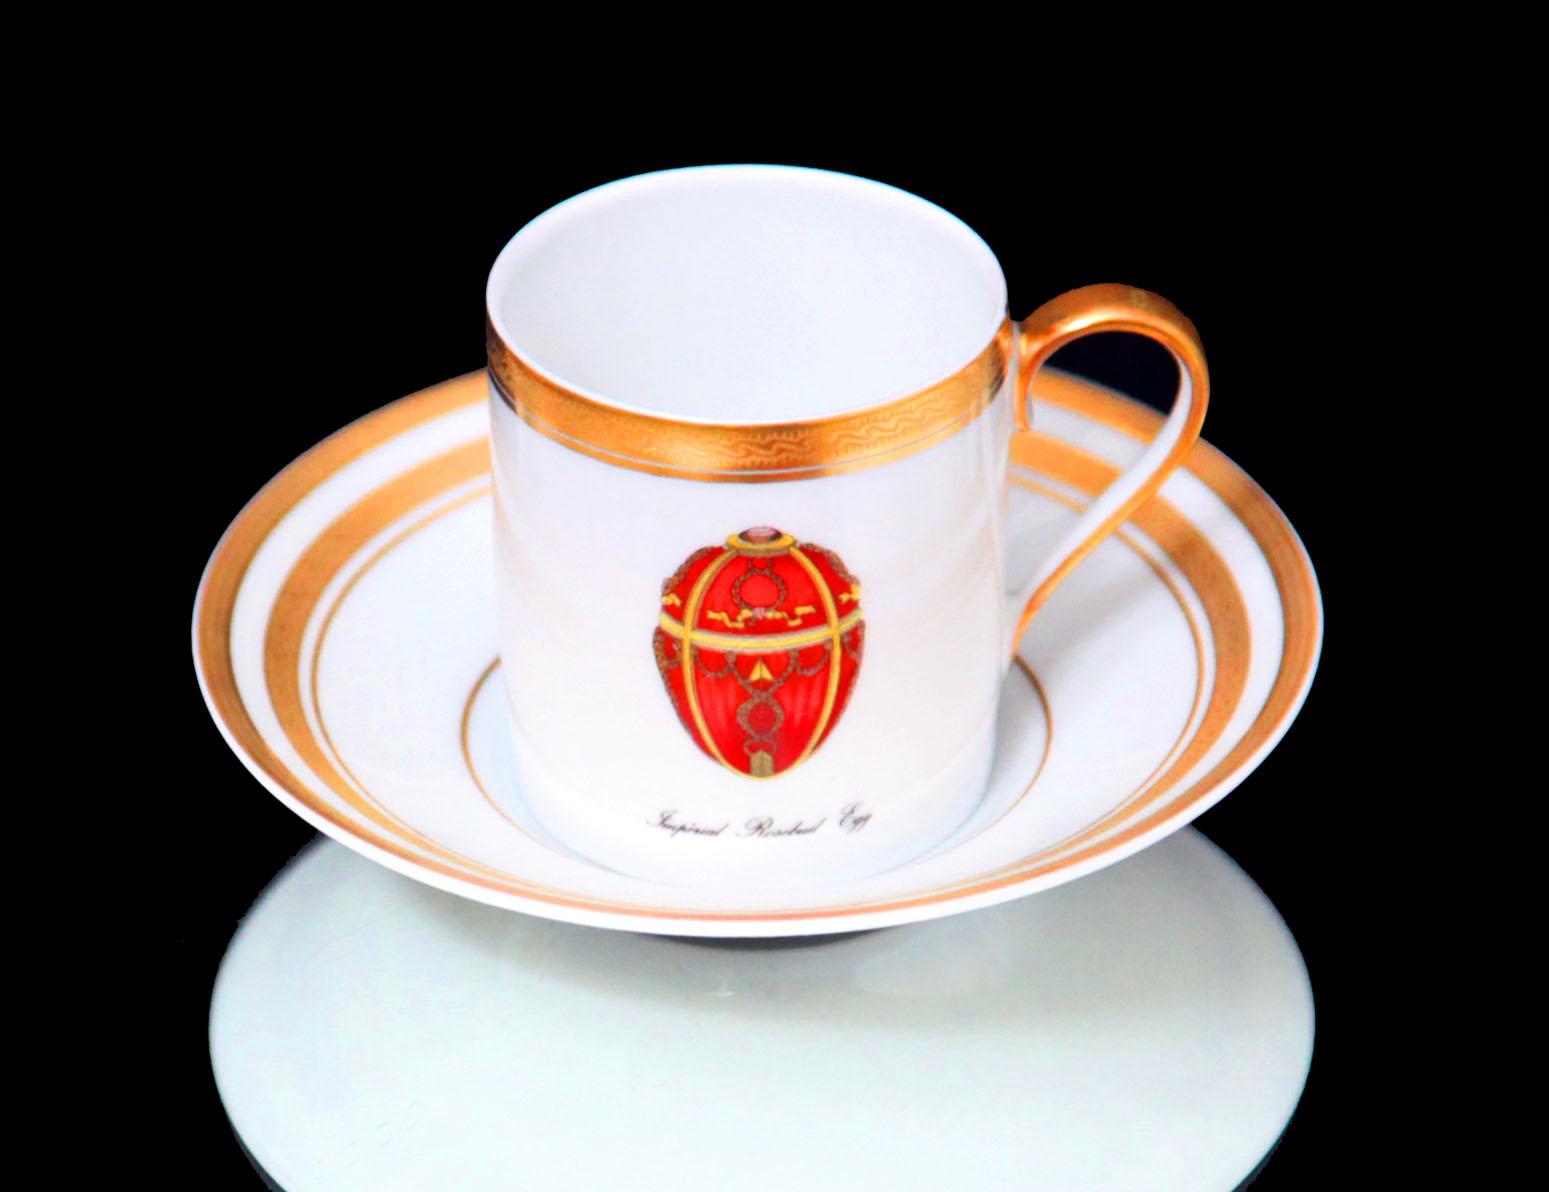 Puiforcat (Hermes), Christofle, Faberge - 5pc. French 950 Sterling Tea Set For Sale 10